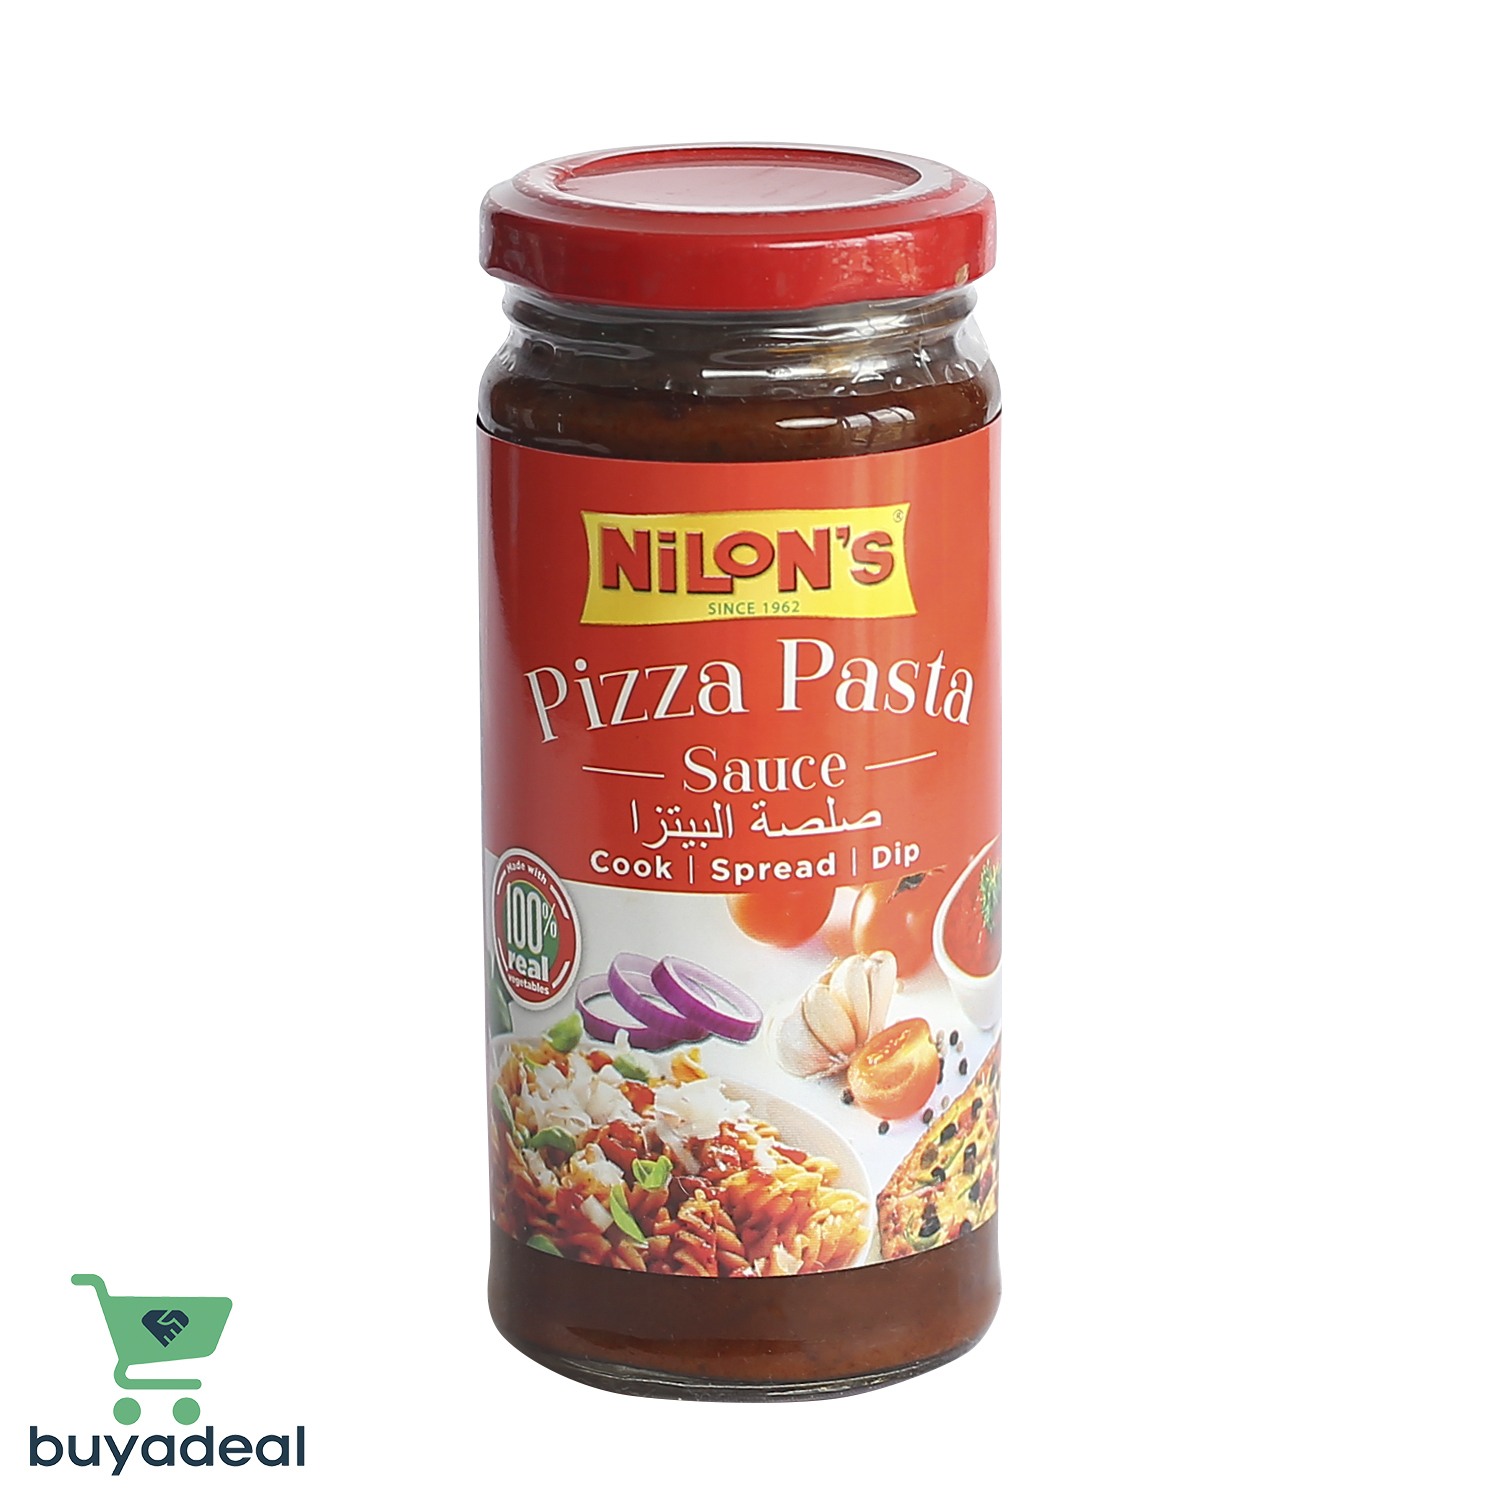 Buyadeal Product Nilon's Pizza Pasta sauce 250g